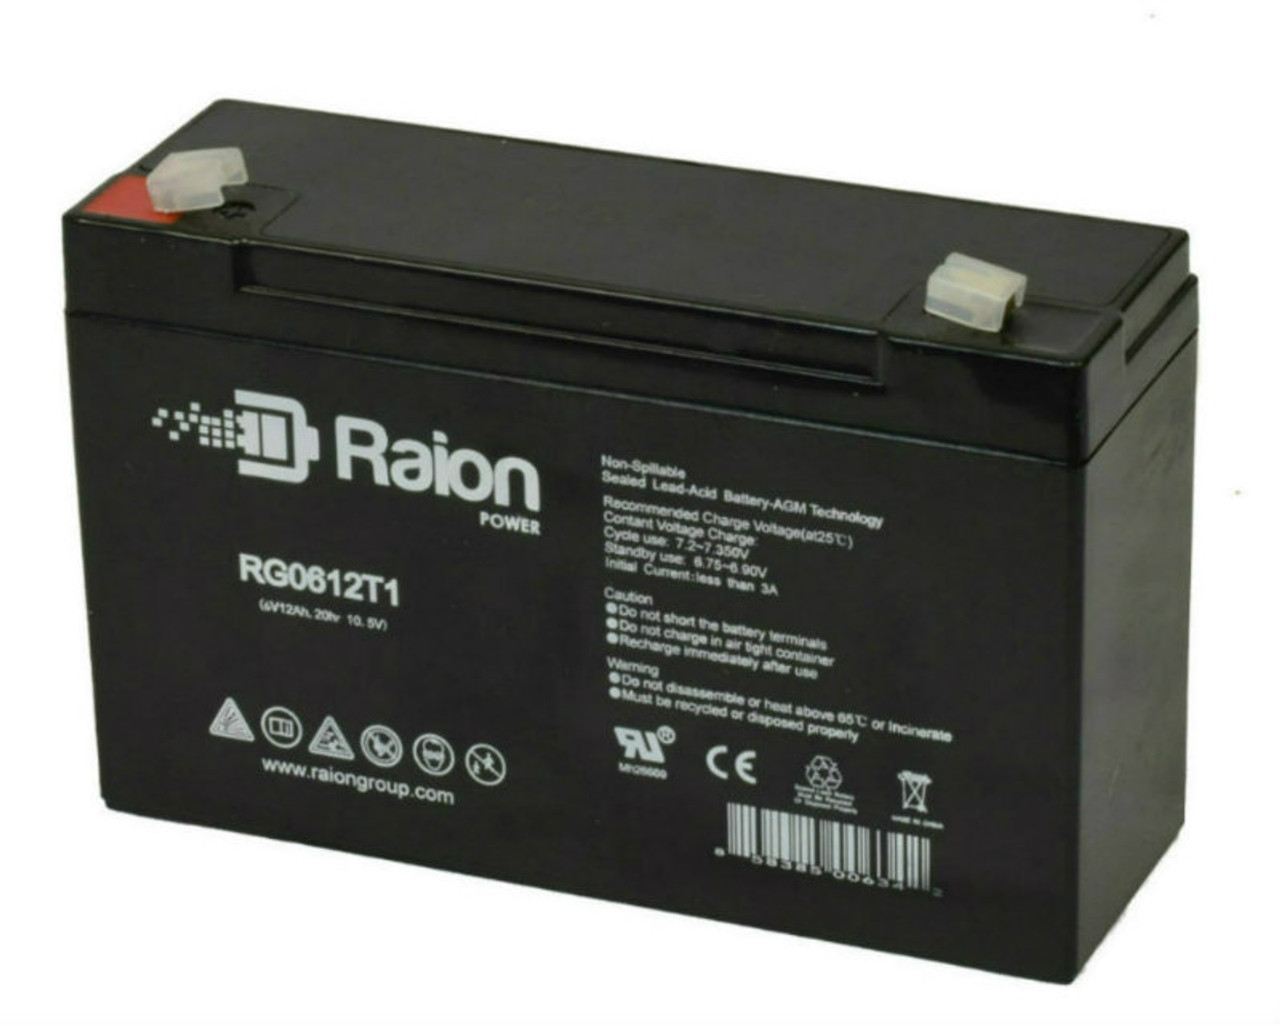 Raion Power RG06120T1 Replacement Battery for Rhino SLA 12-6